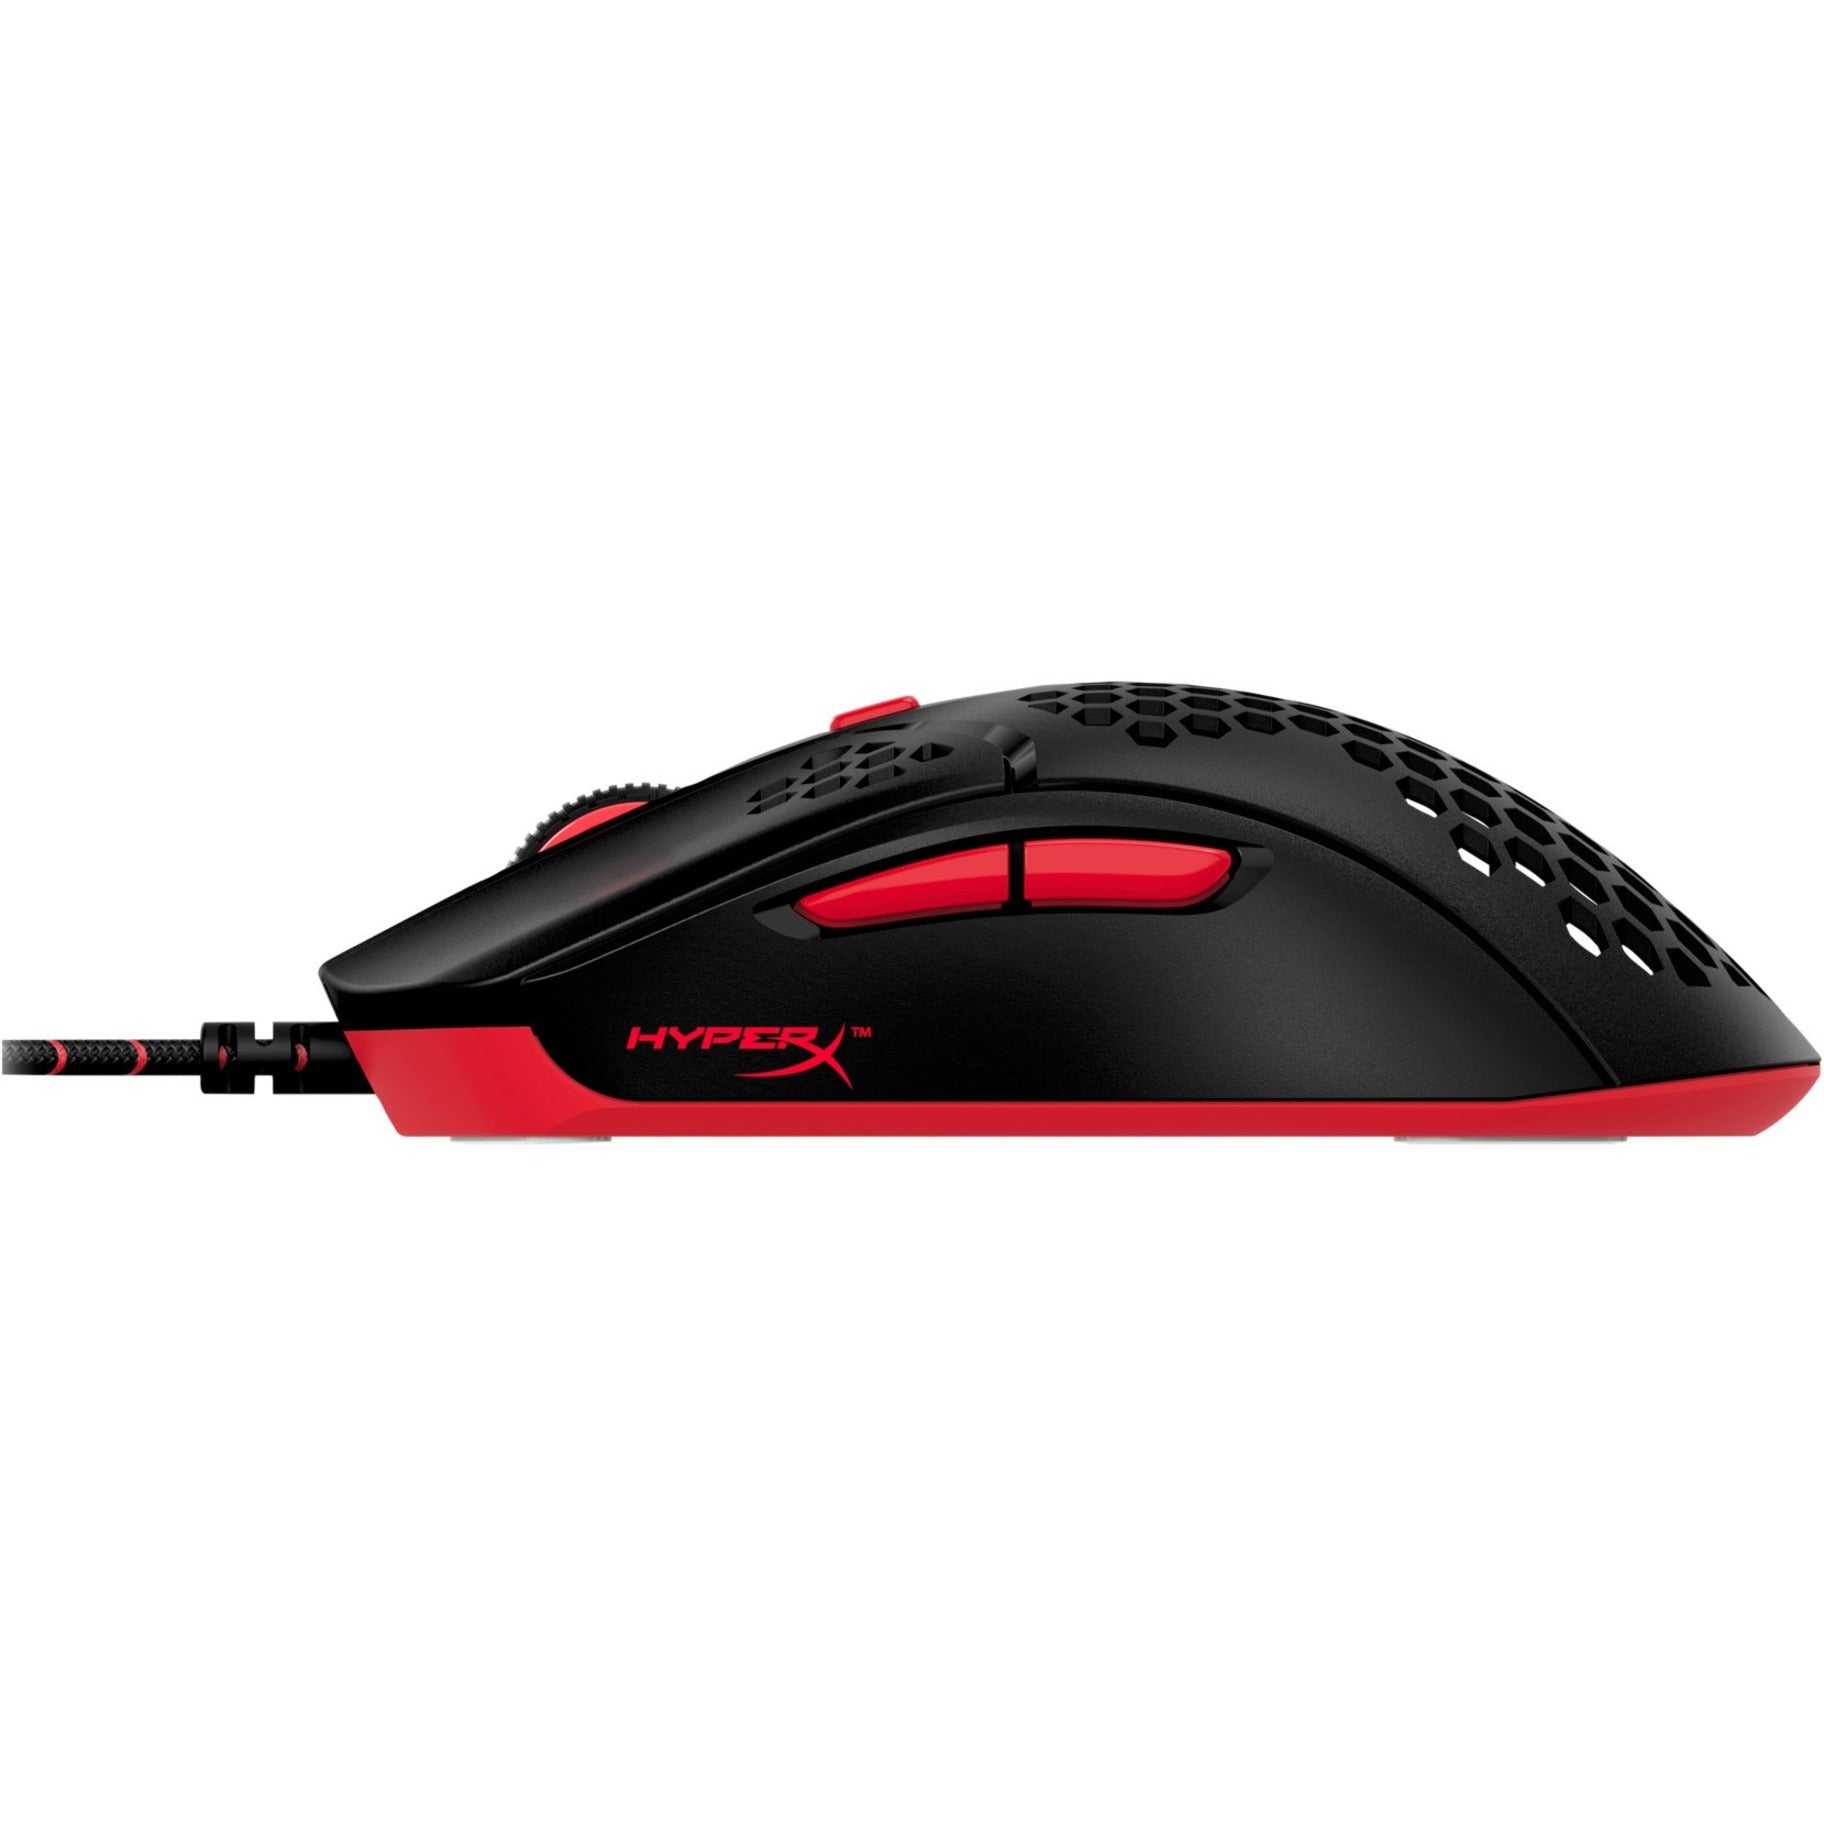 HyperX 4P5E3AA Pulsefire Haste Gaming Mouse, Black-Red, Symmetrical, Optical, 16000 dpi, Split-Button